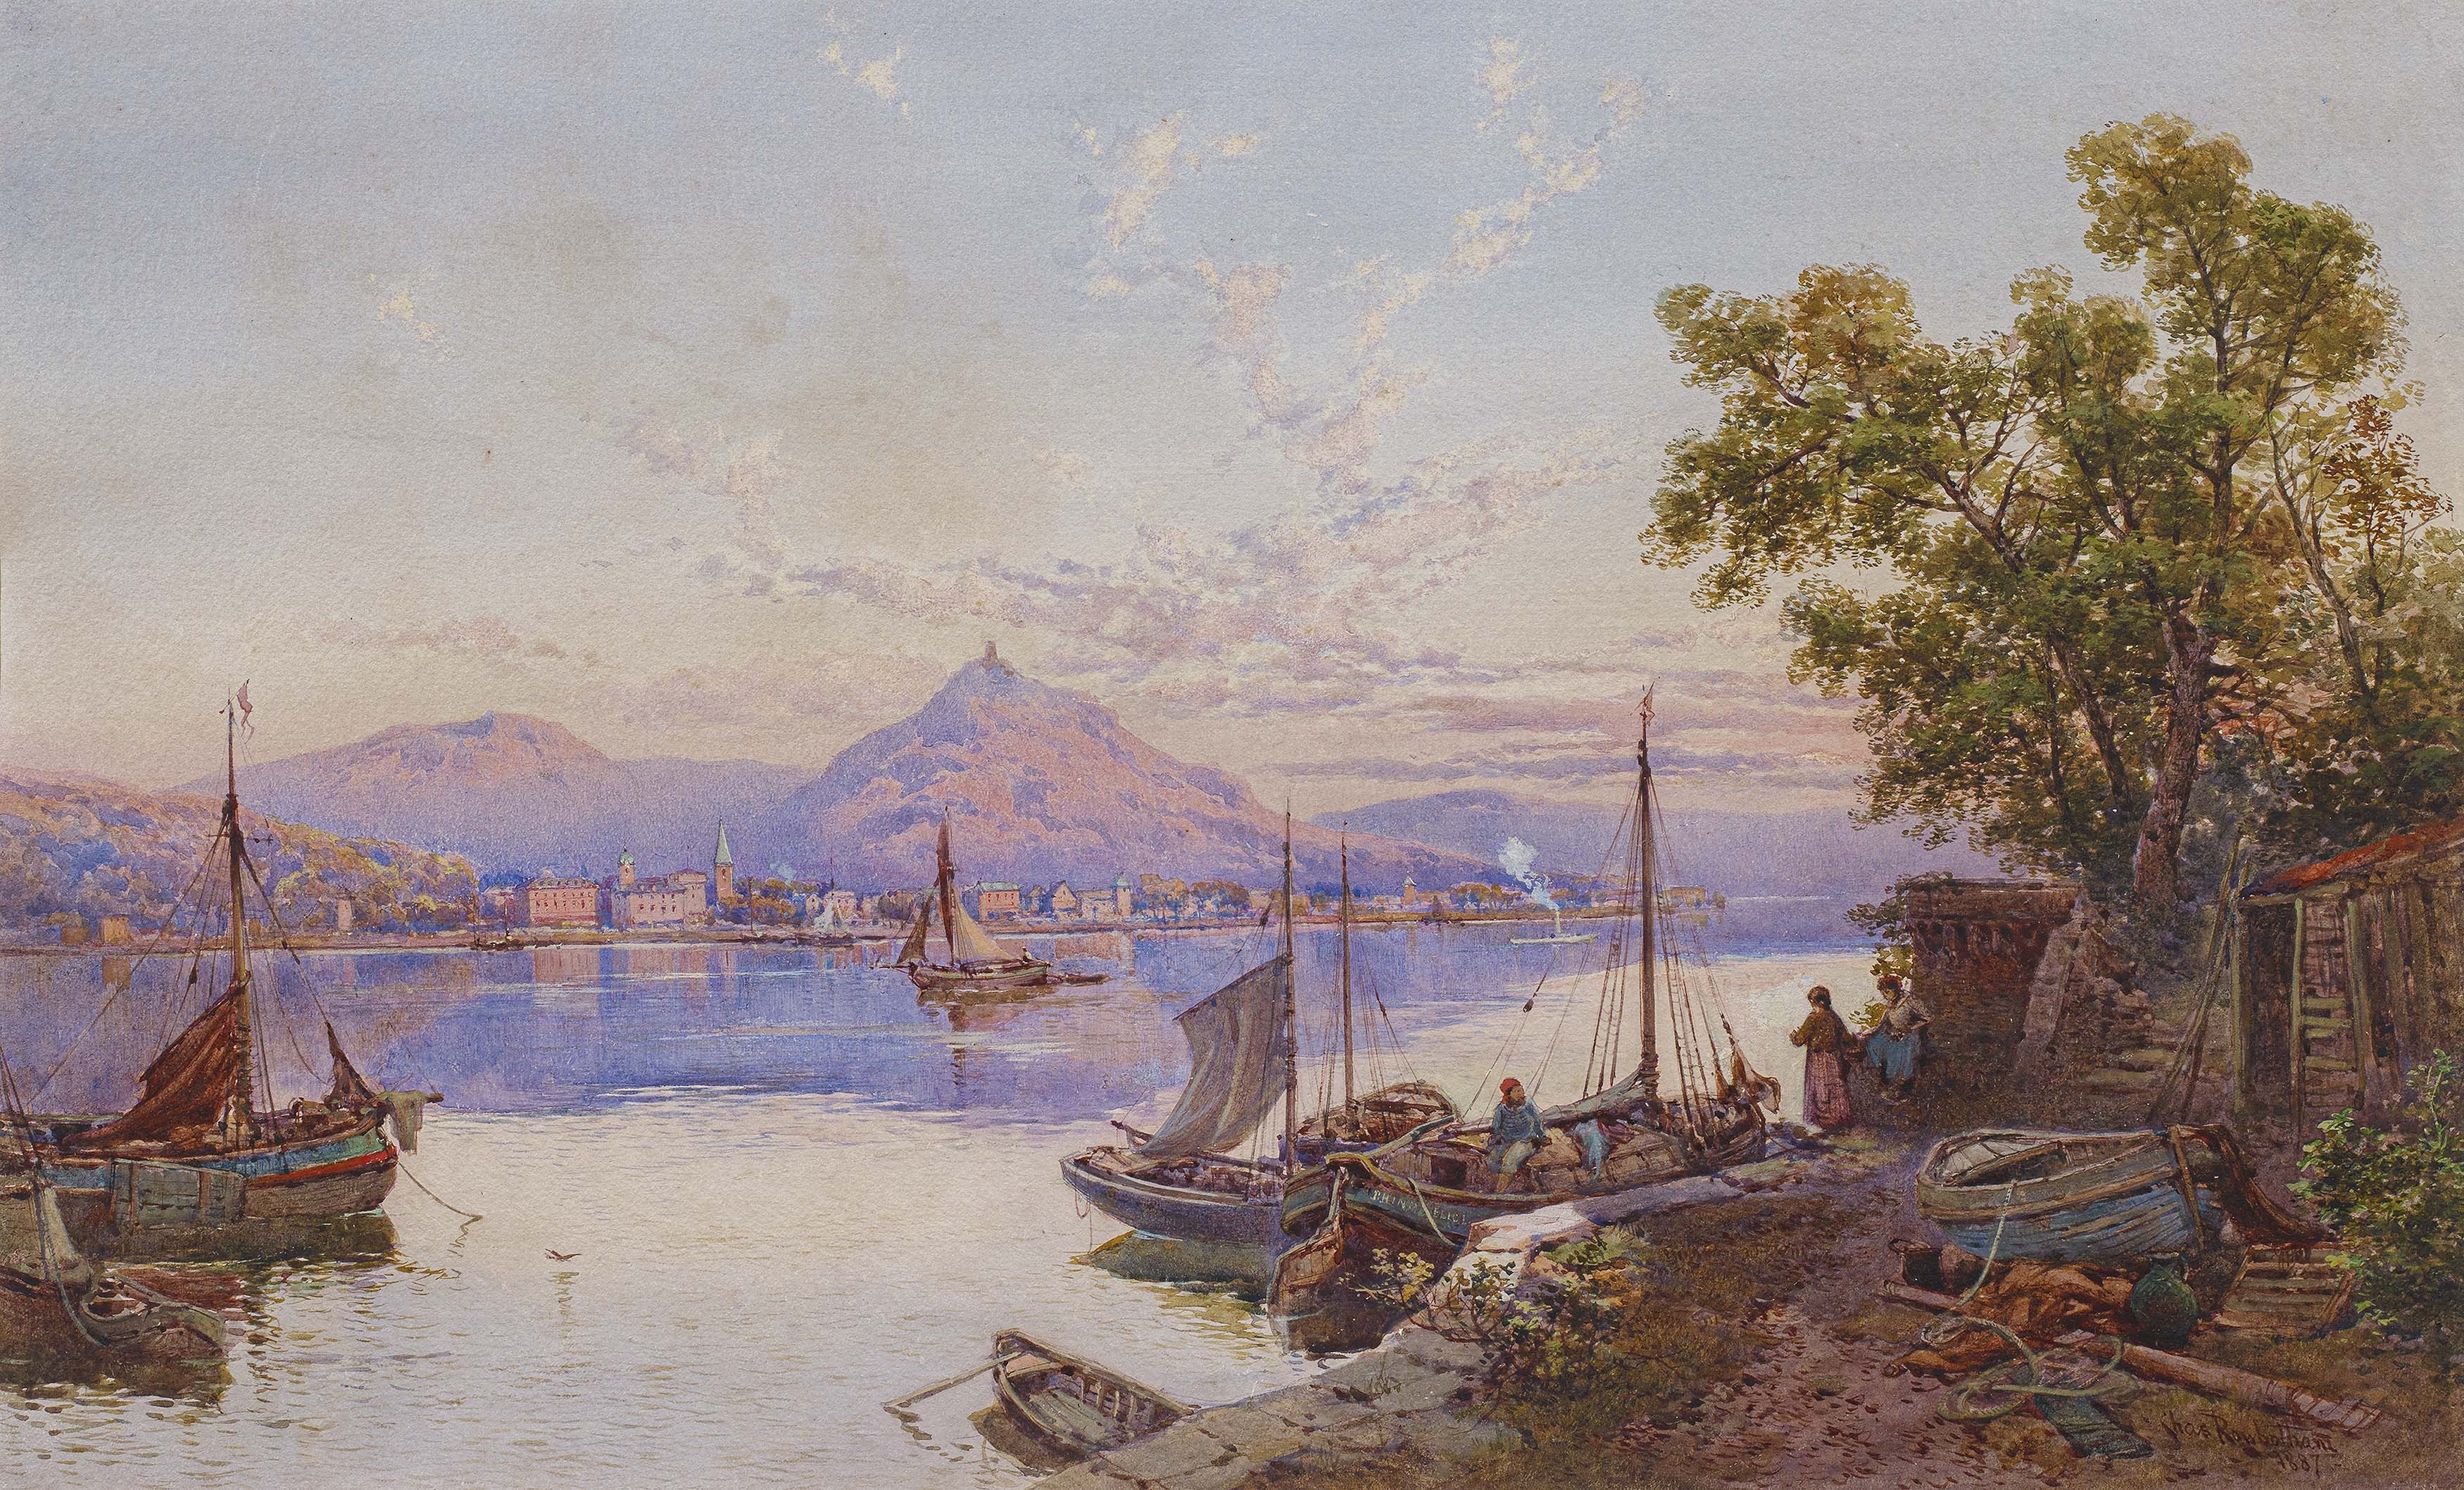 Morning Mood on the Rhine against the Backdrop of the Siebengebirge and Drachenfels. by Charles Edmund Rowbotham, 1887